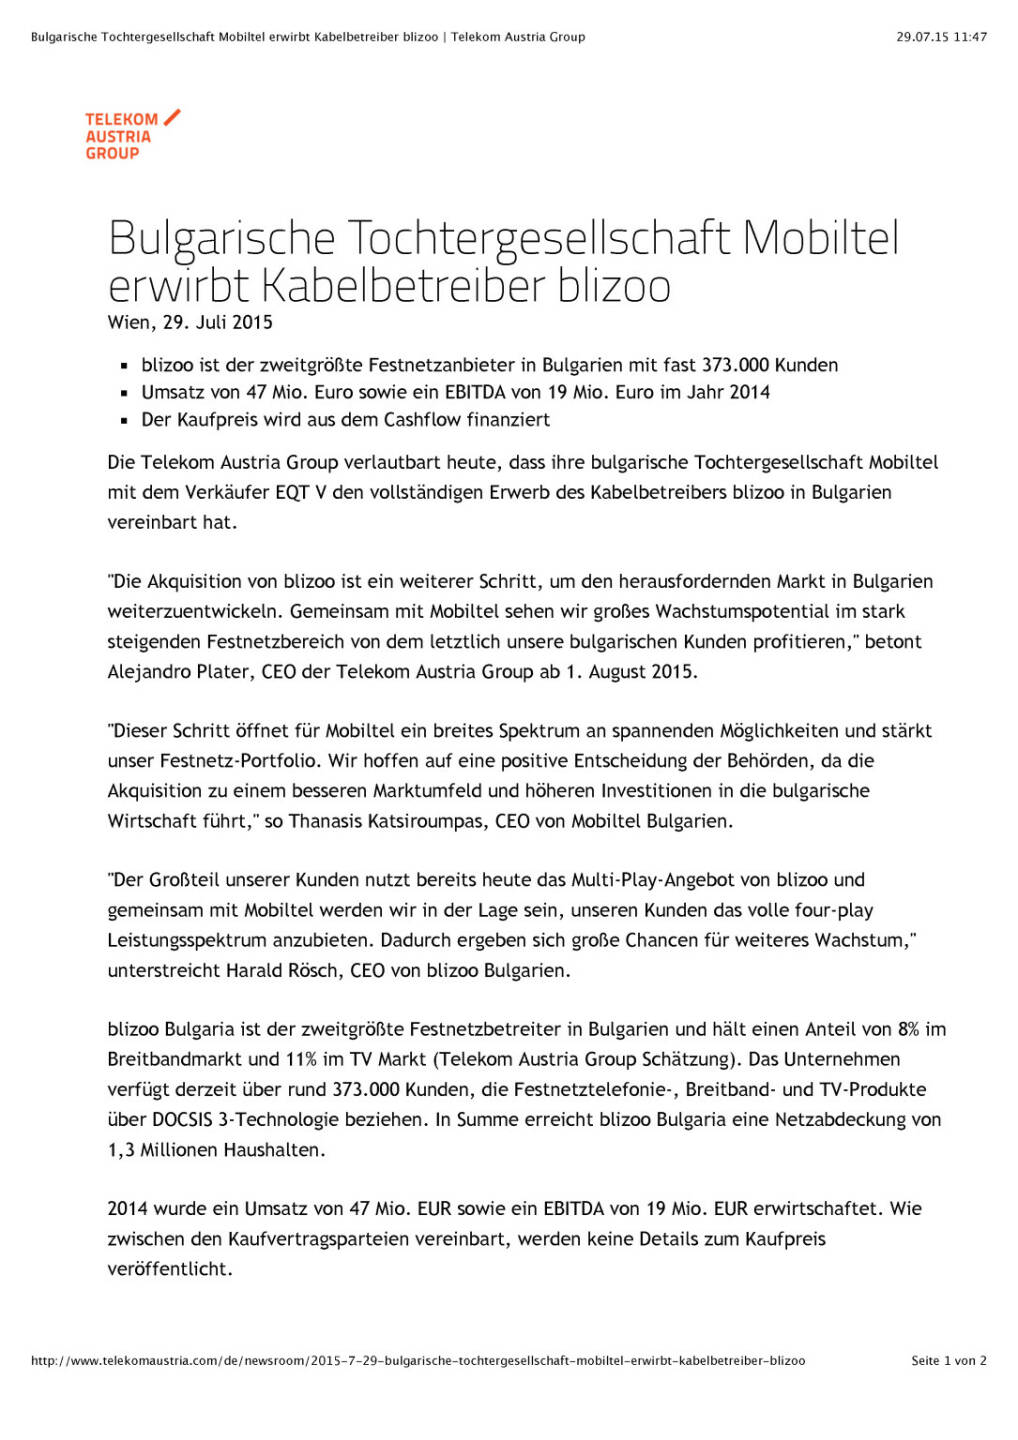 Telekom Austria: Mobiltel erwirbt blizoo, Seite 1/2, komplettes Dokument unter http://boerse-social.com/static/uploads/file_262_telekom_austria_mobiltel_erwirbt_blizoo.pdf